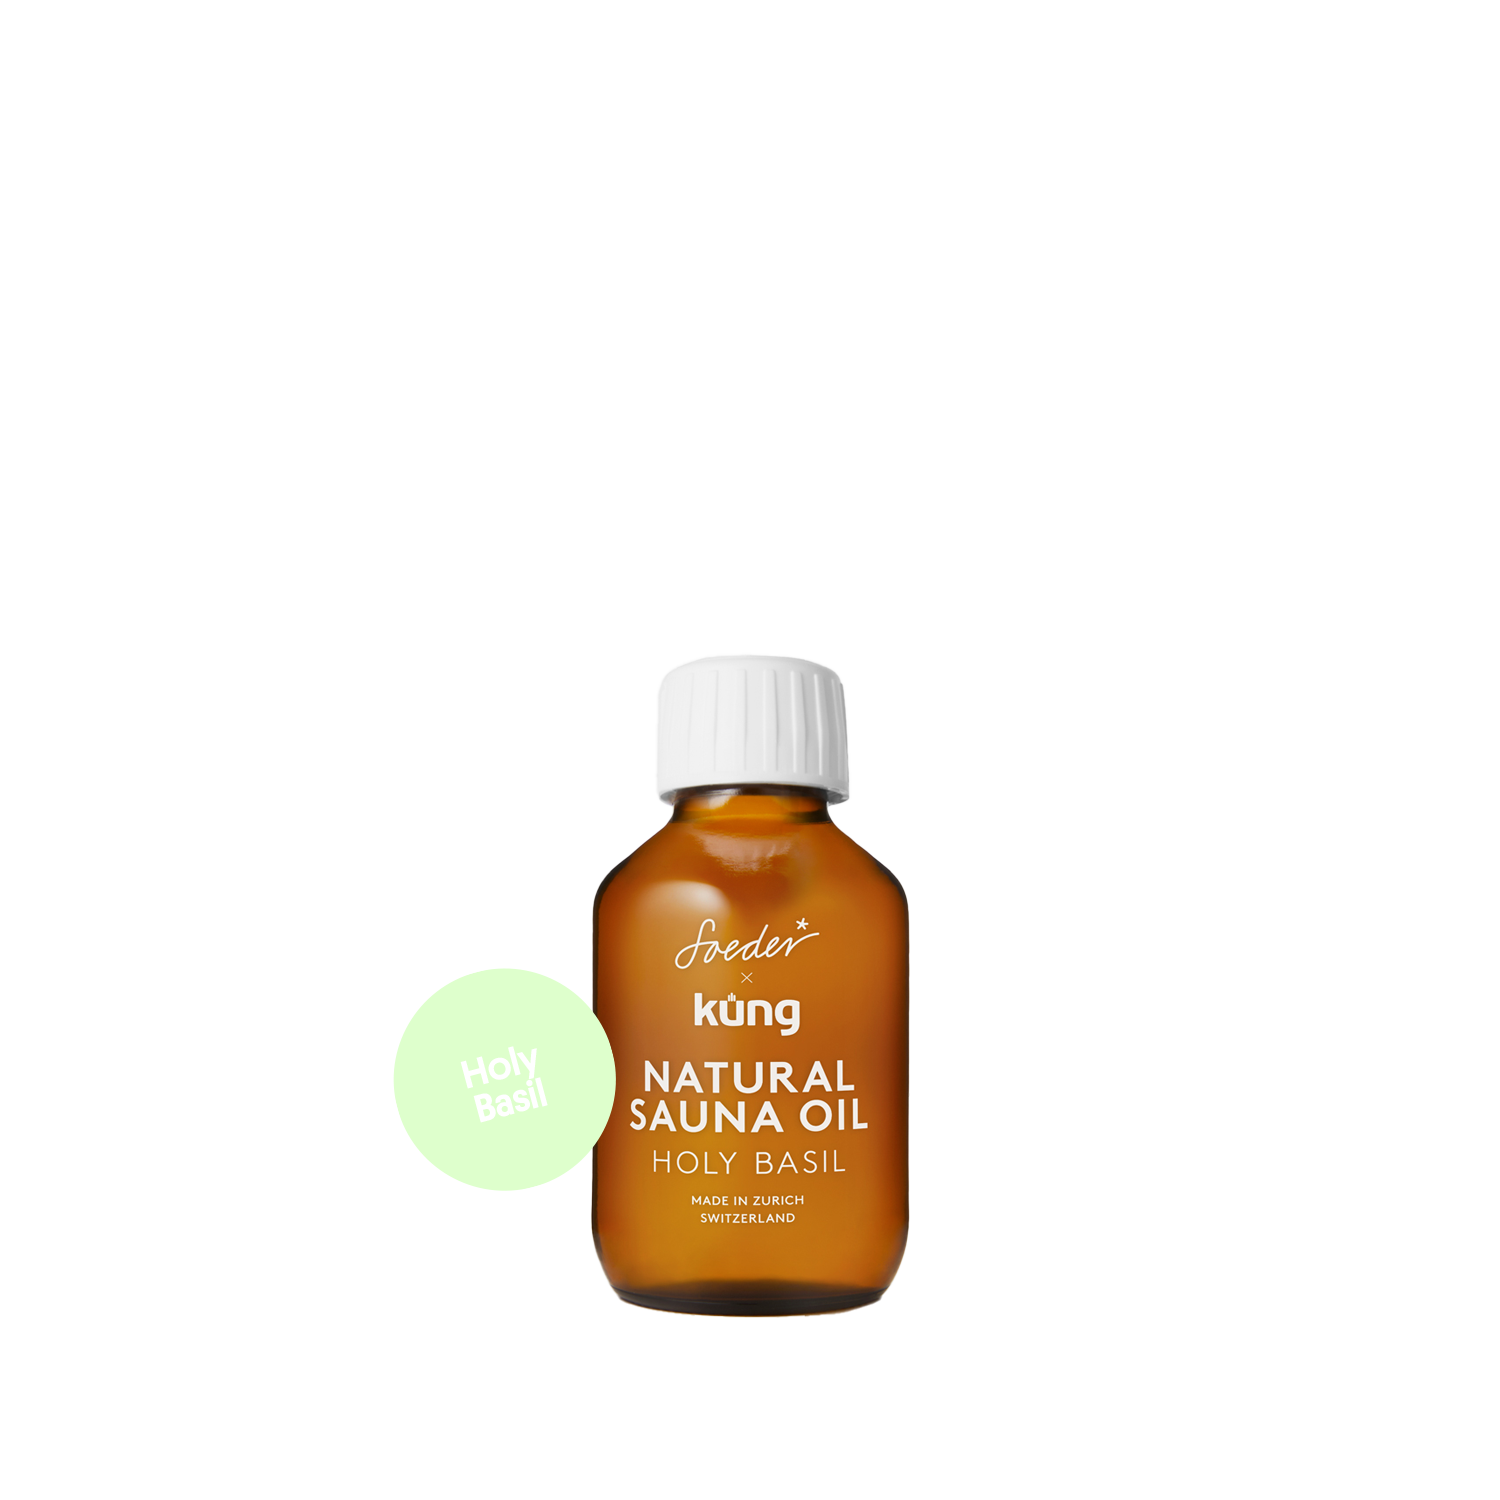 Natural Sauna Oil - Holy Basil  Oil 100 ml von soeder*